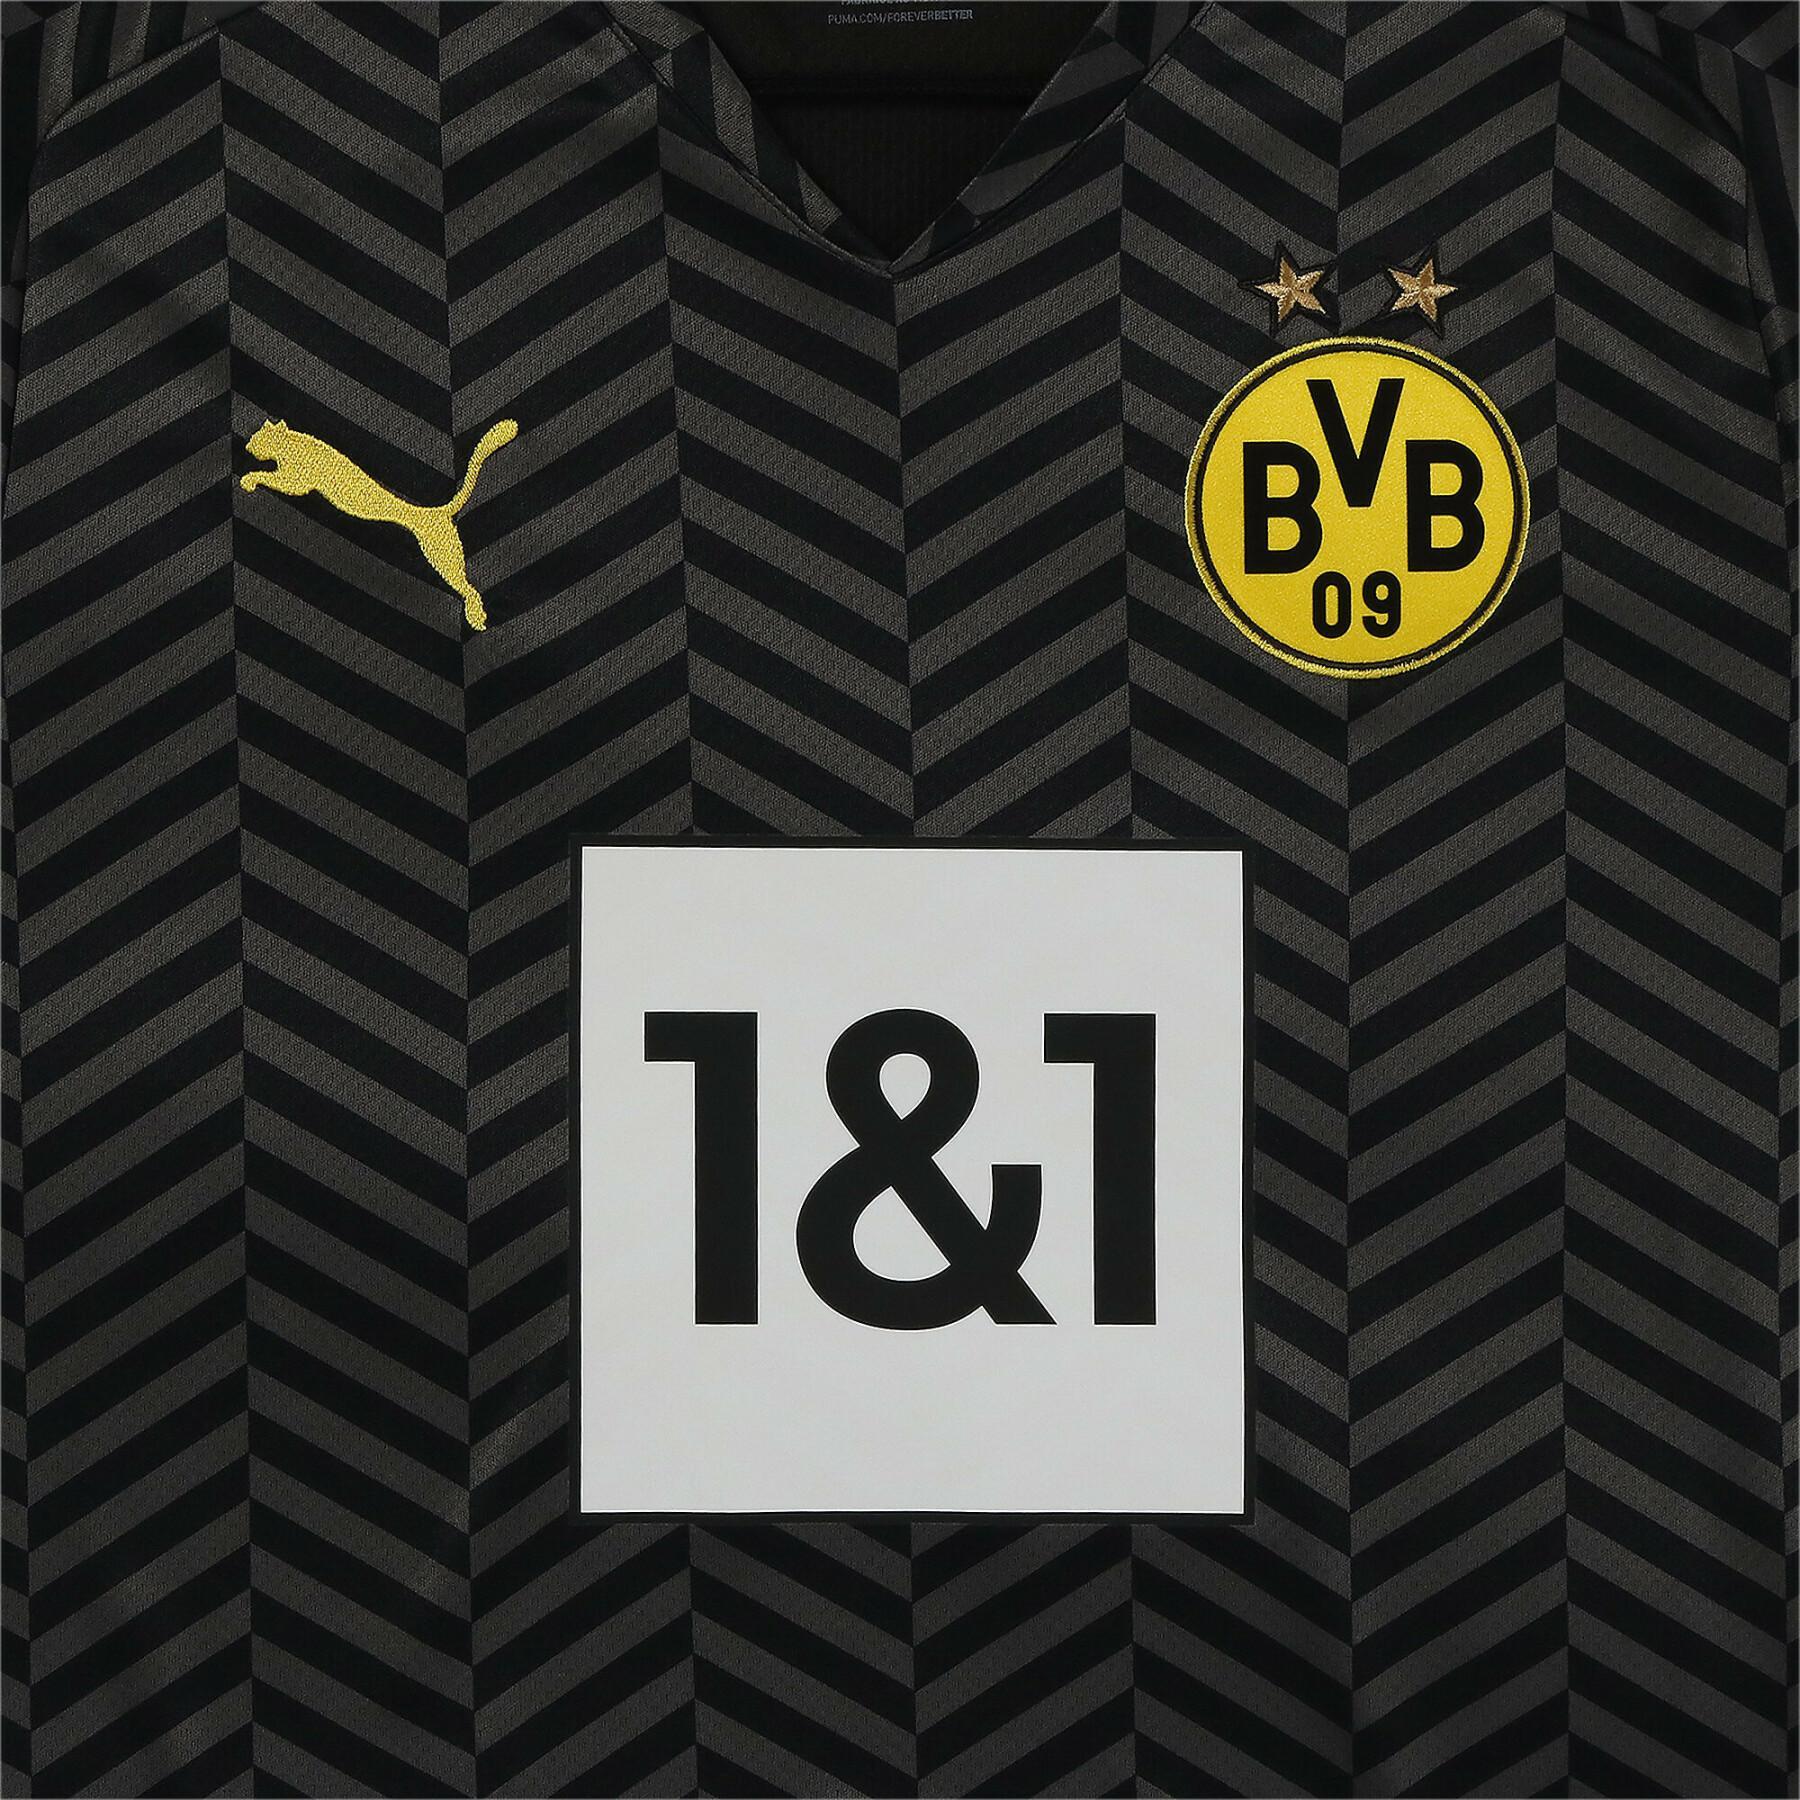 Outdoor jersey Borussia Dortmund 2021/22